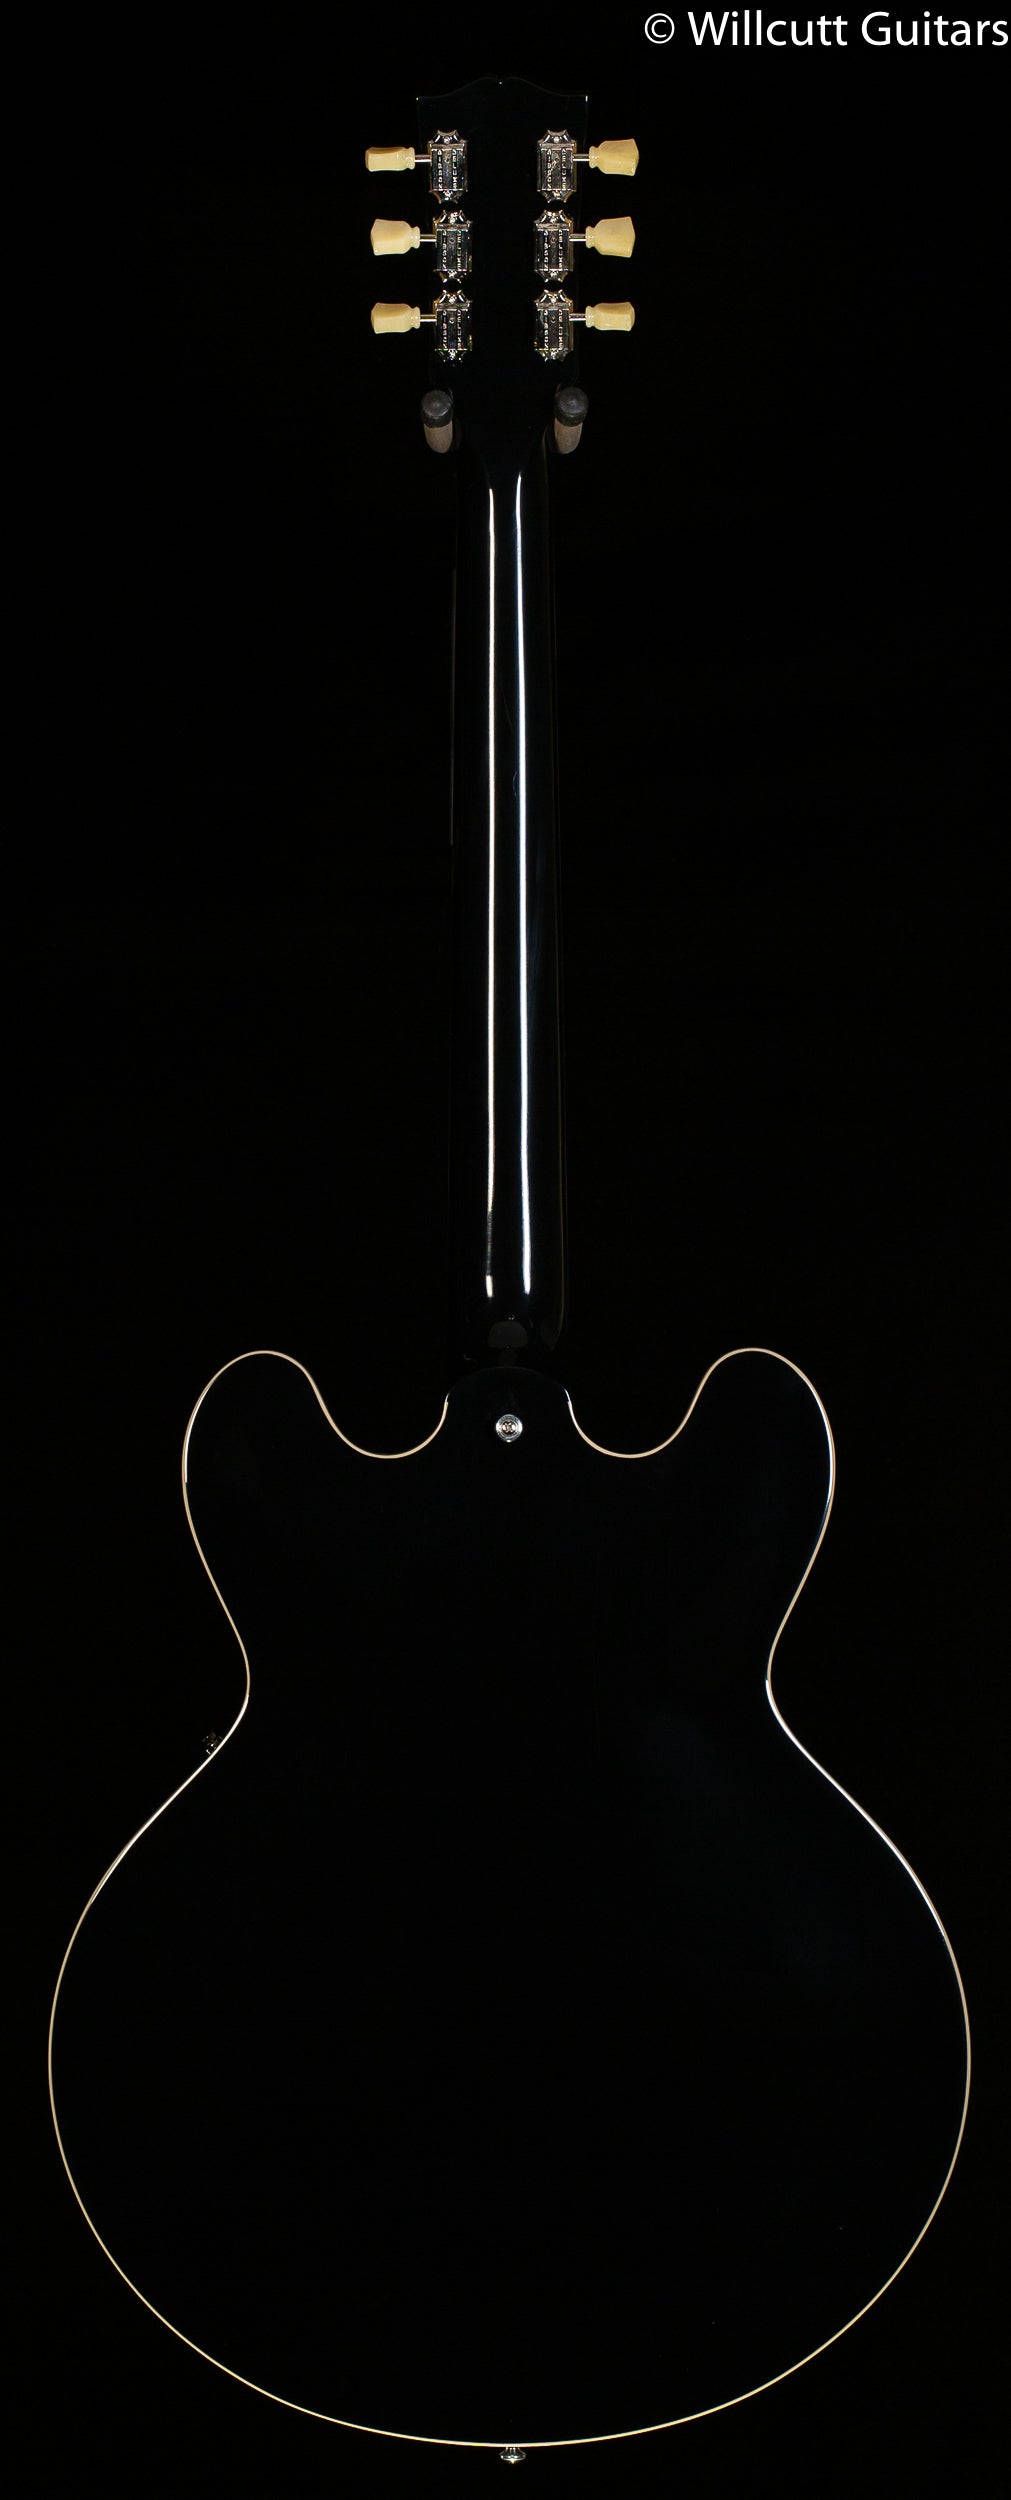 Gibson ES-335 Vintage Ebony - Willcutt Guitars